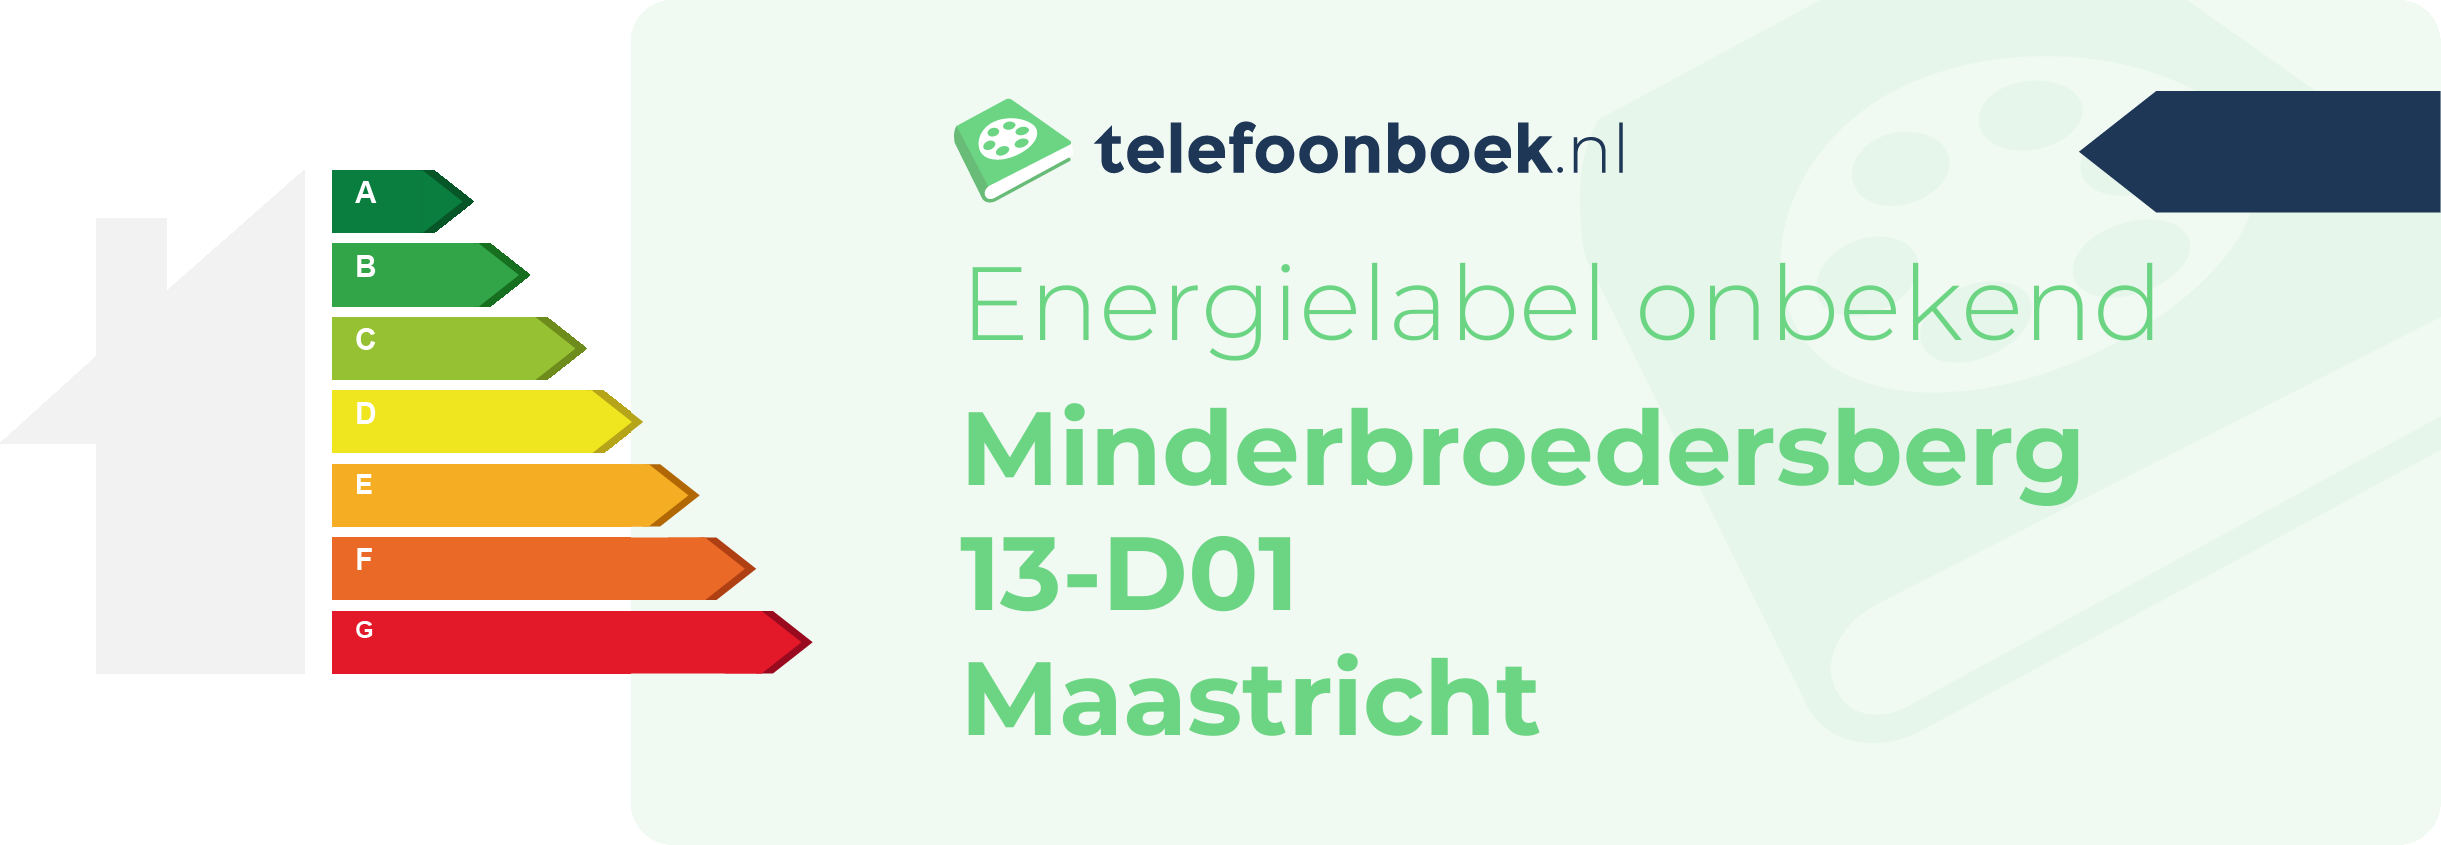 Energielabel Minderbroedersberg 13-D01 Maastricht